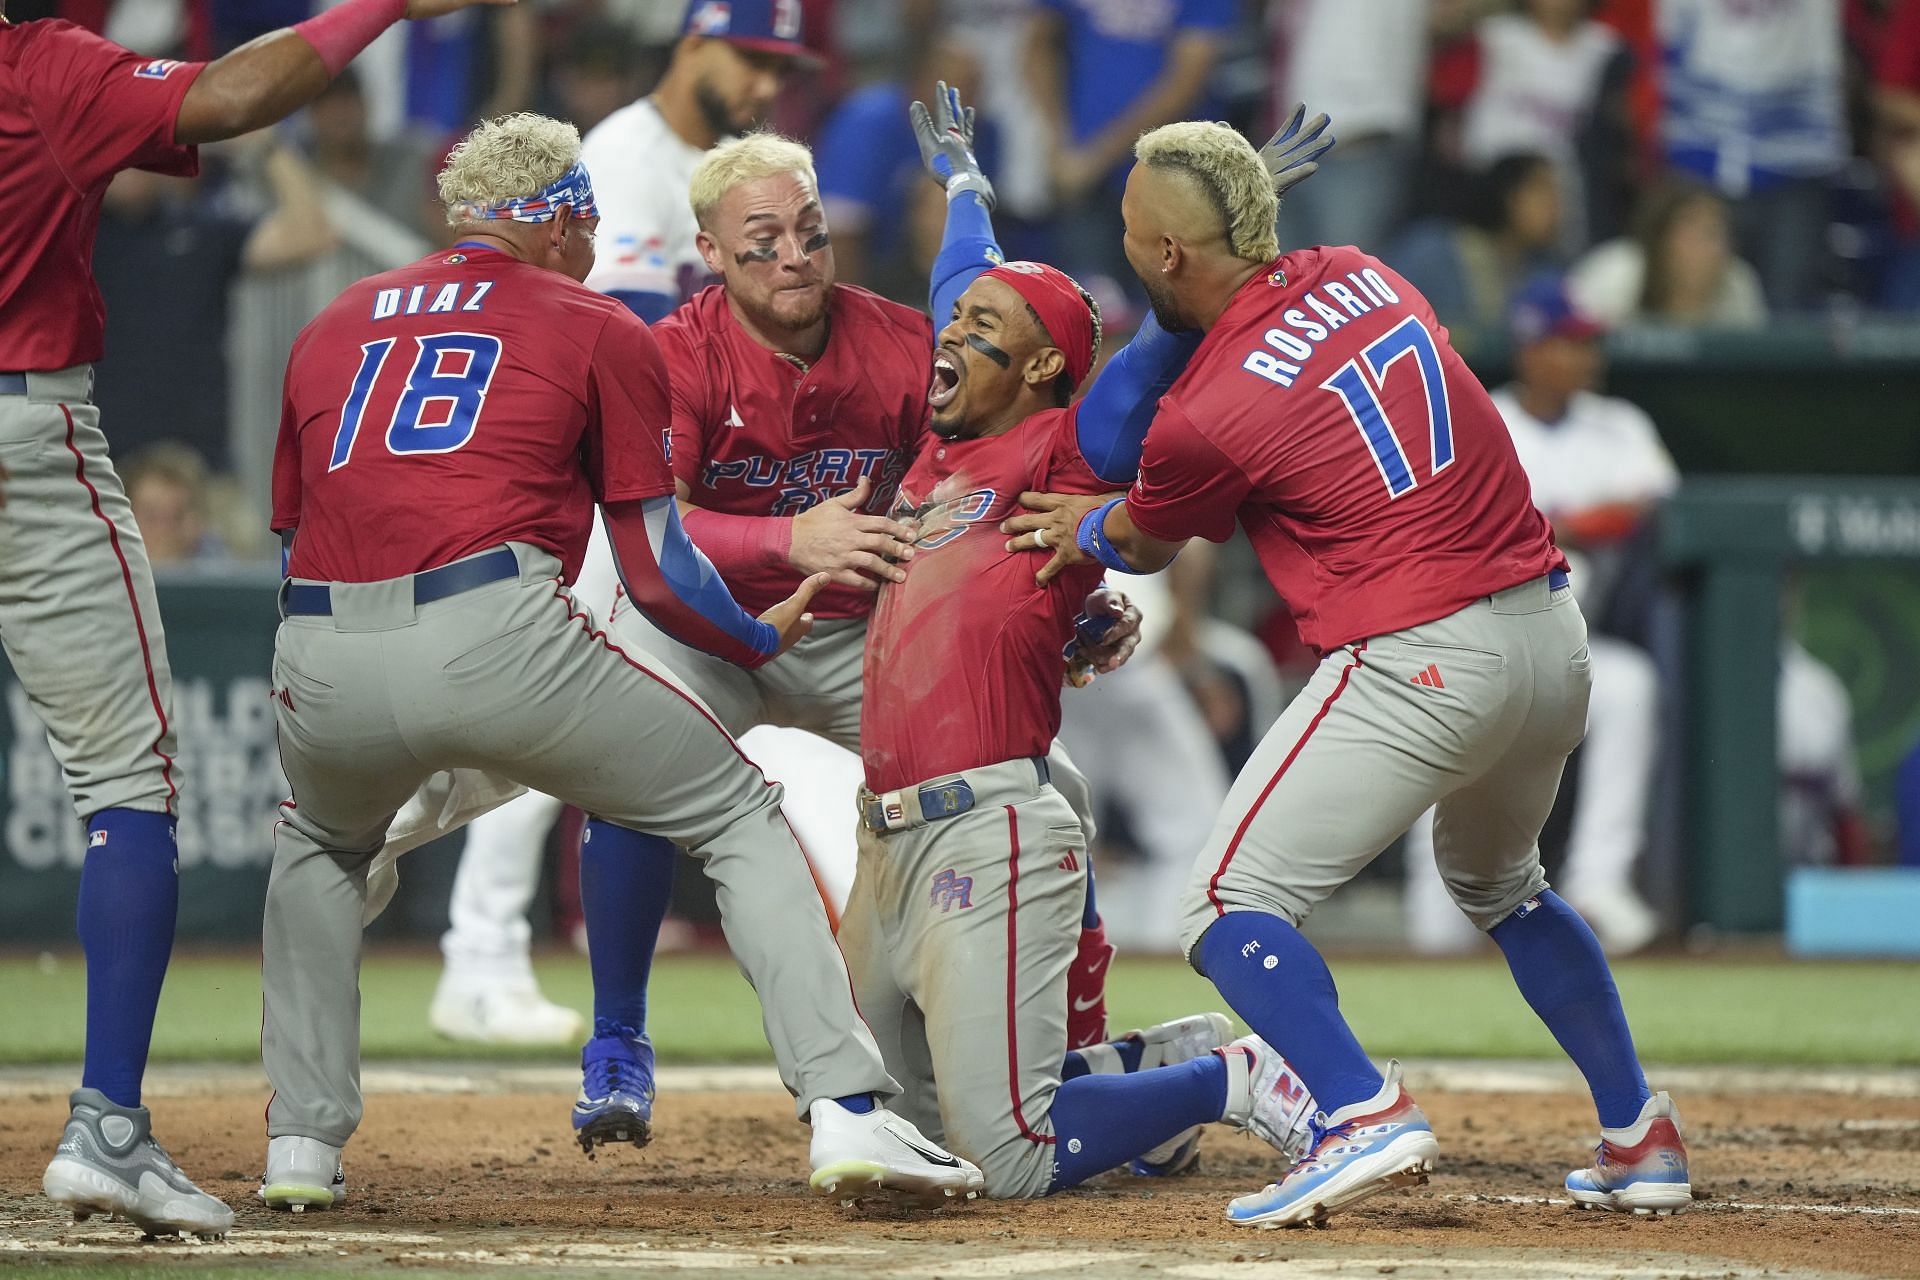 Puerto Rico knocks off Canada in battle of unbeaten baseball teams